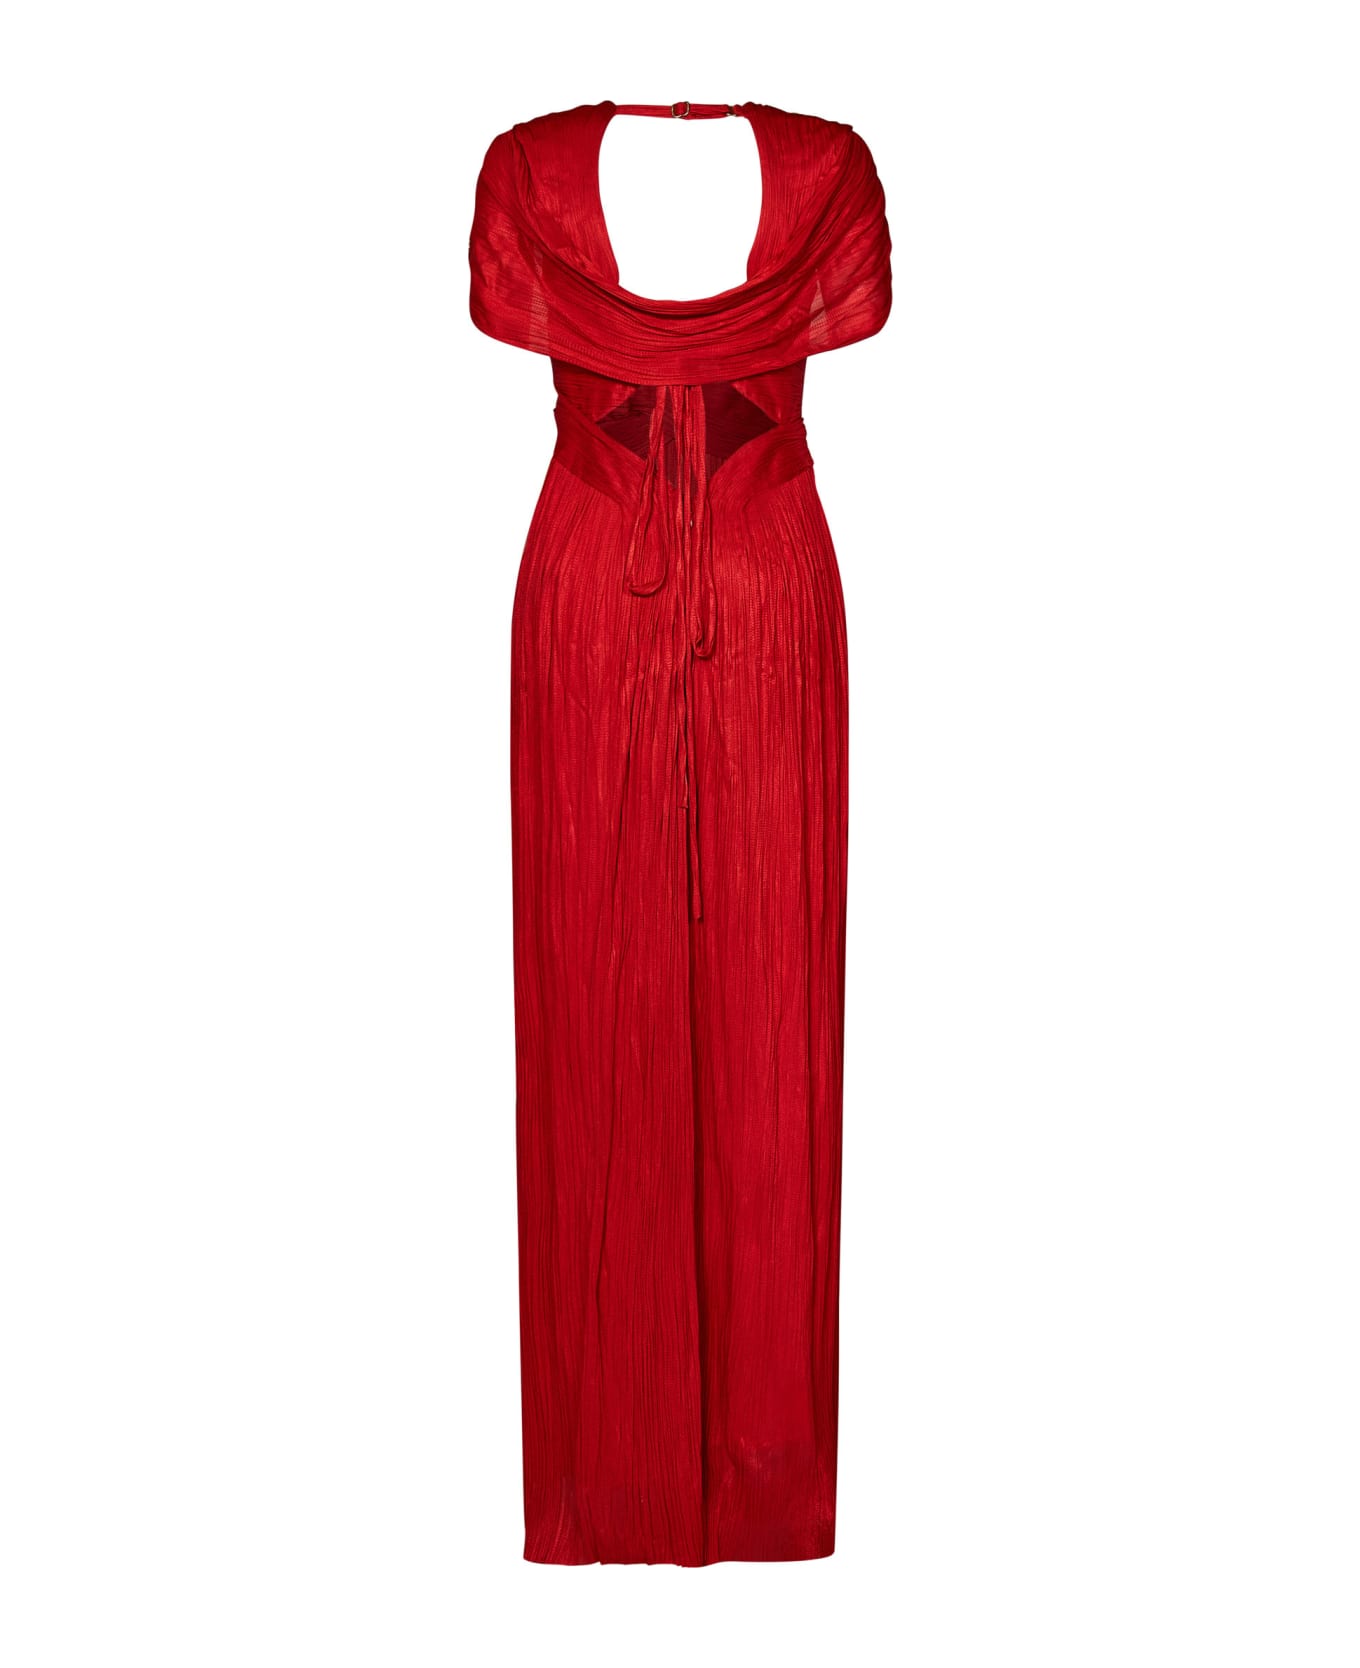 Maria Lucia Hohan Laurel Long Dress - Red